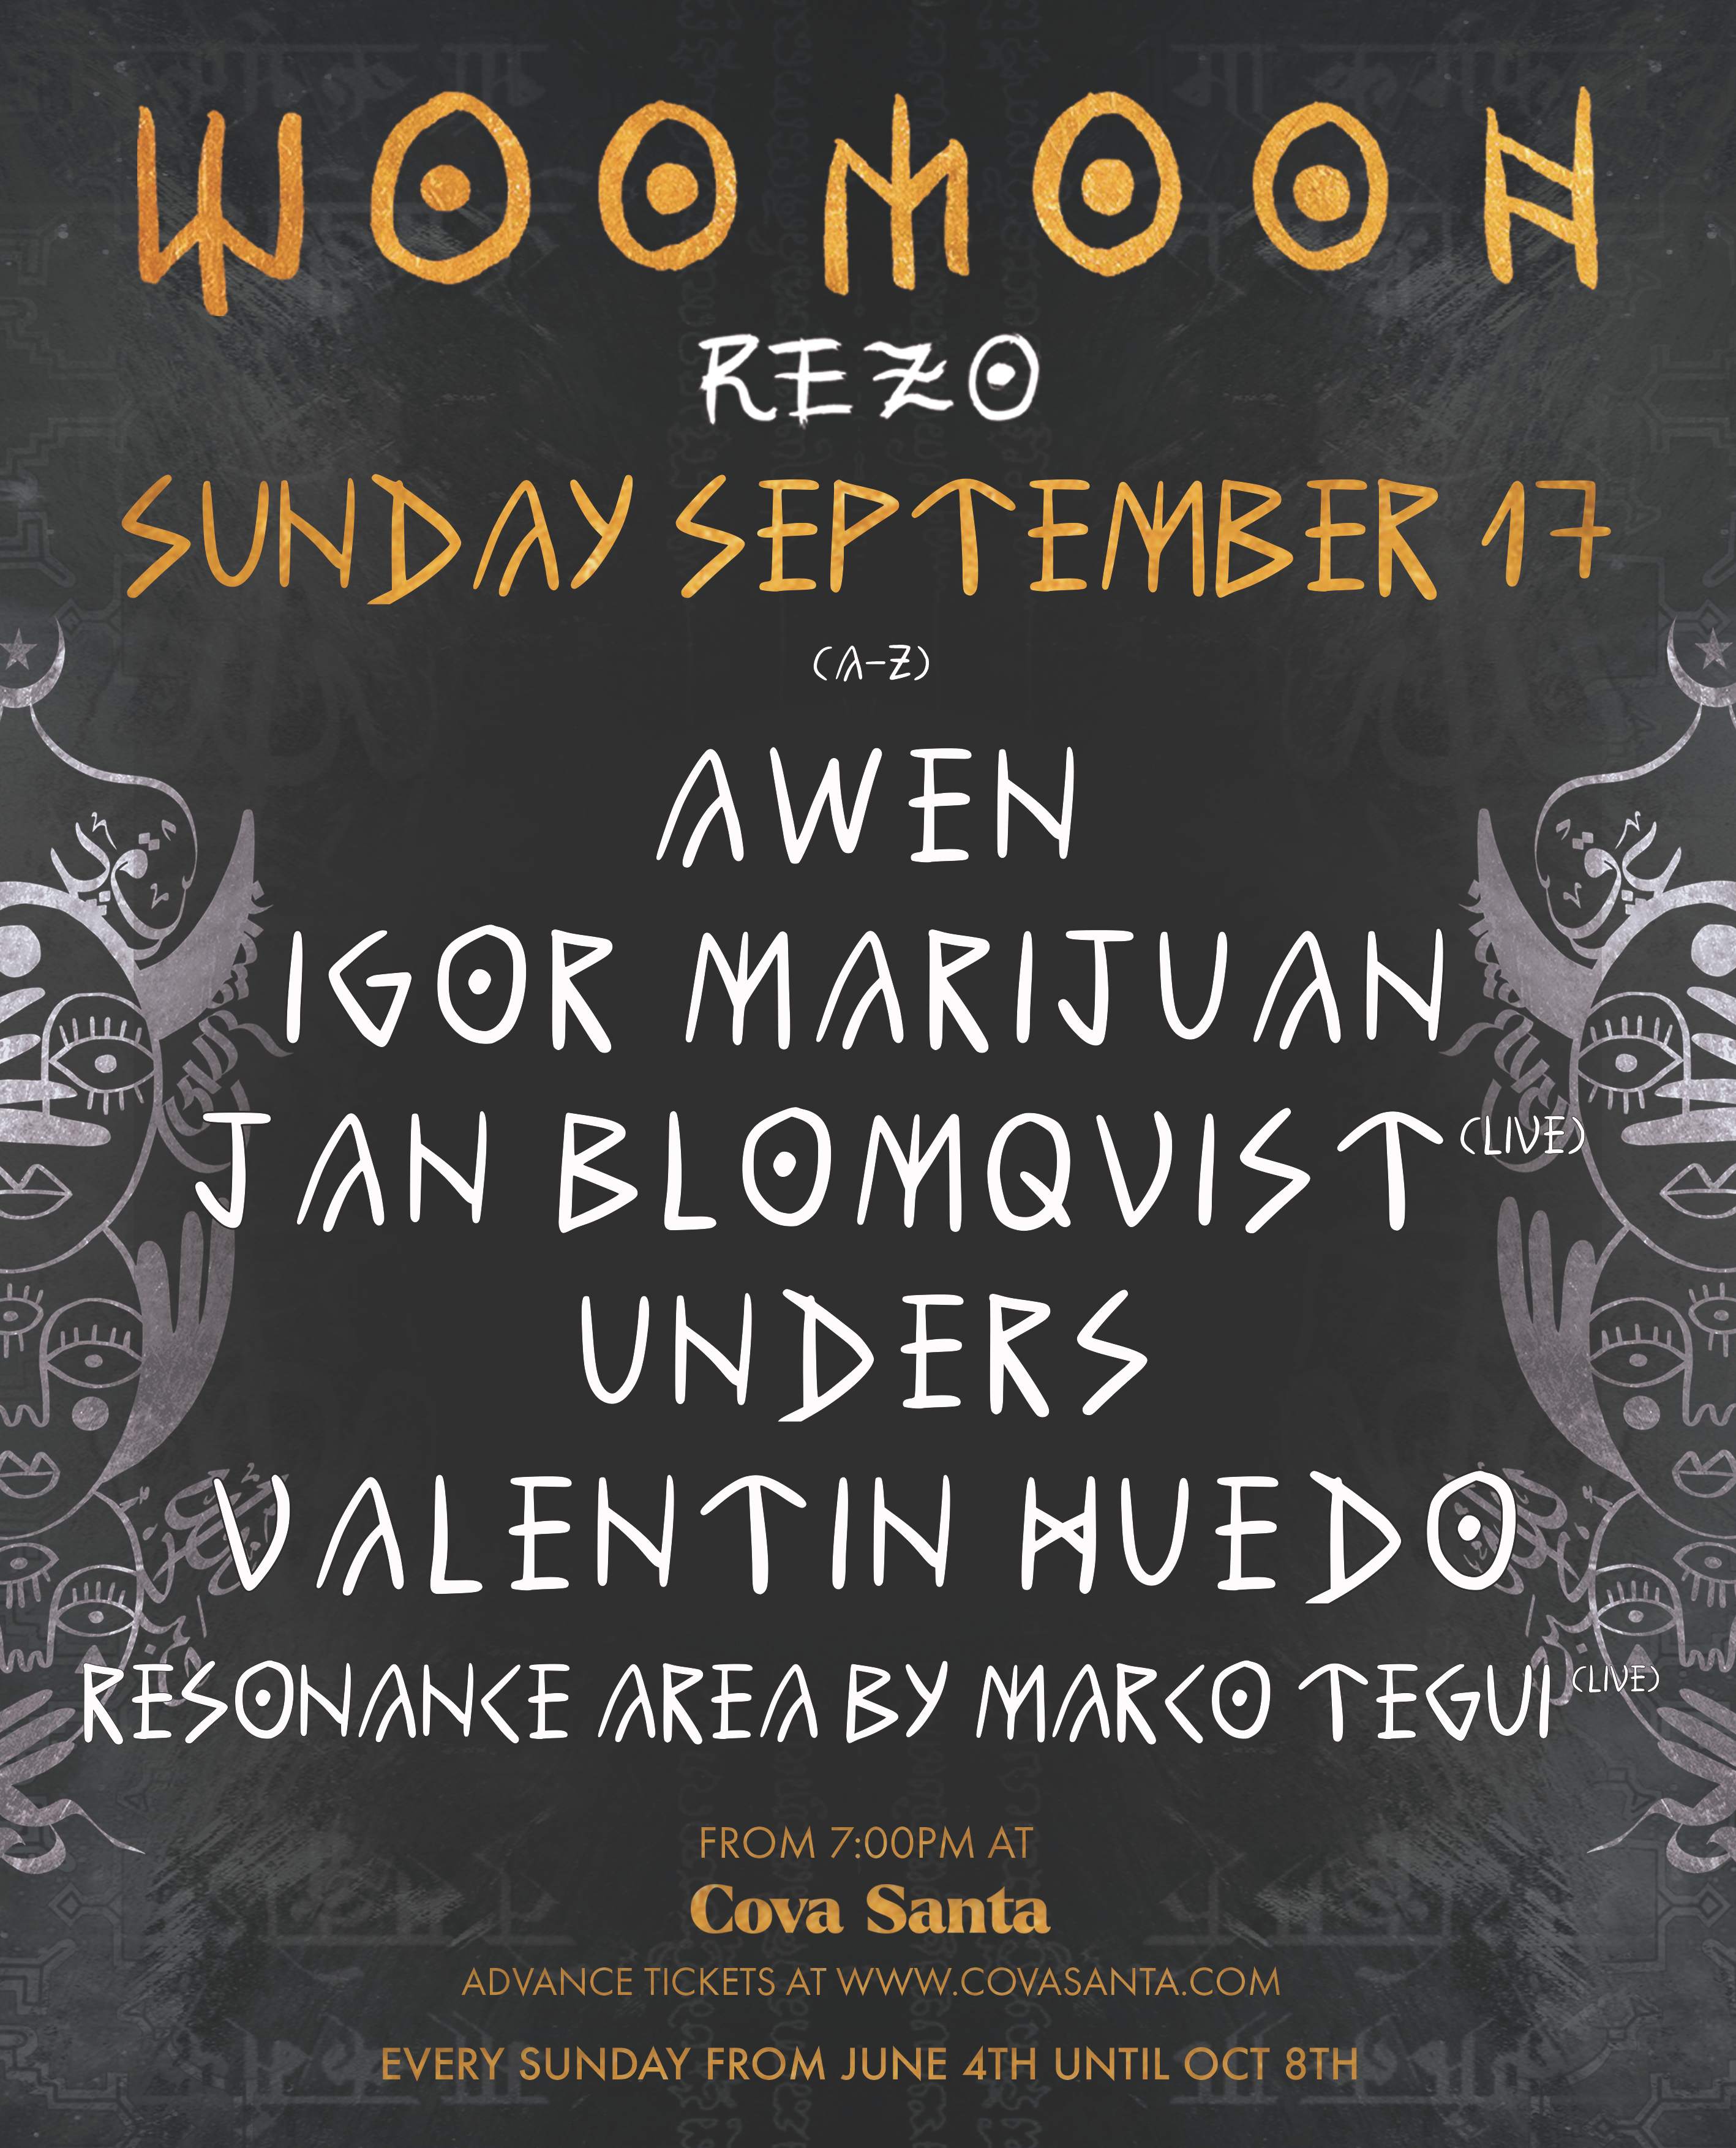 WooMoon - Sunday, September 17th - フライヤー表